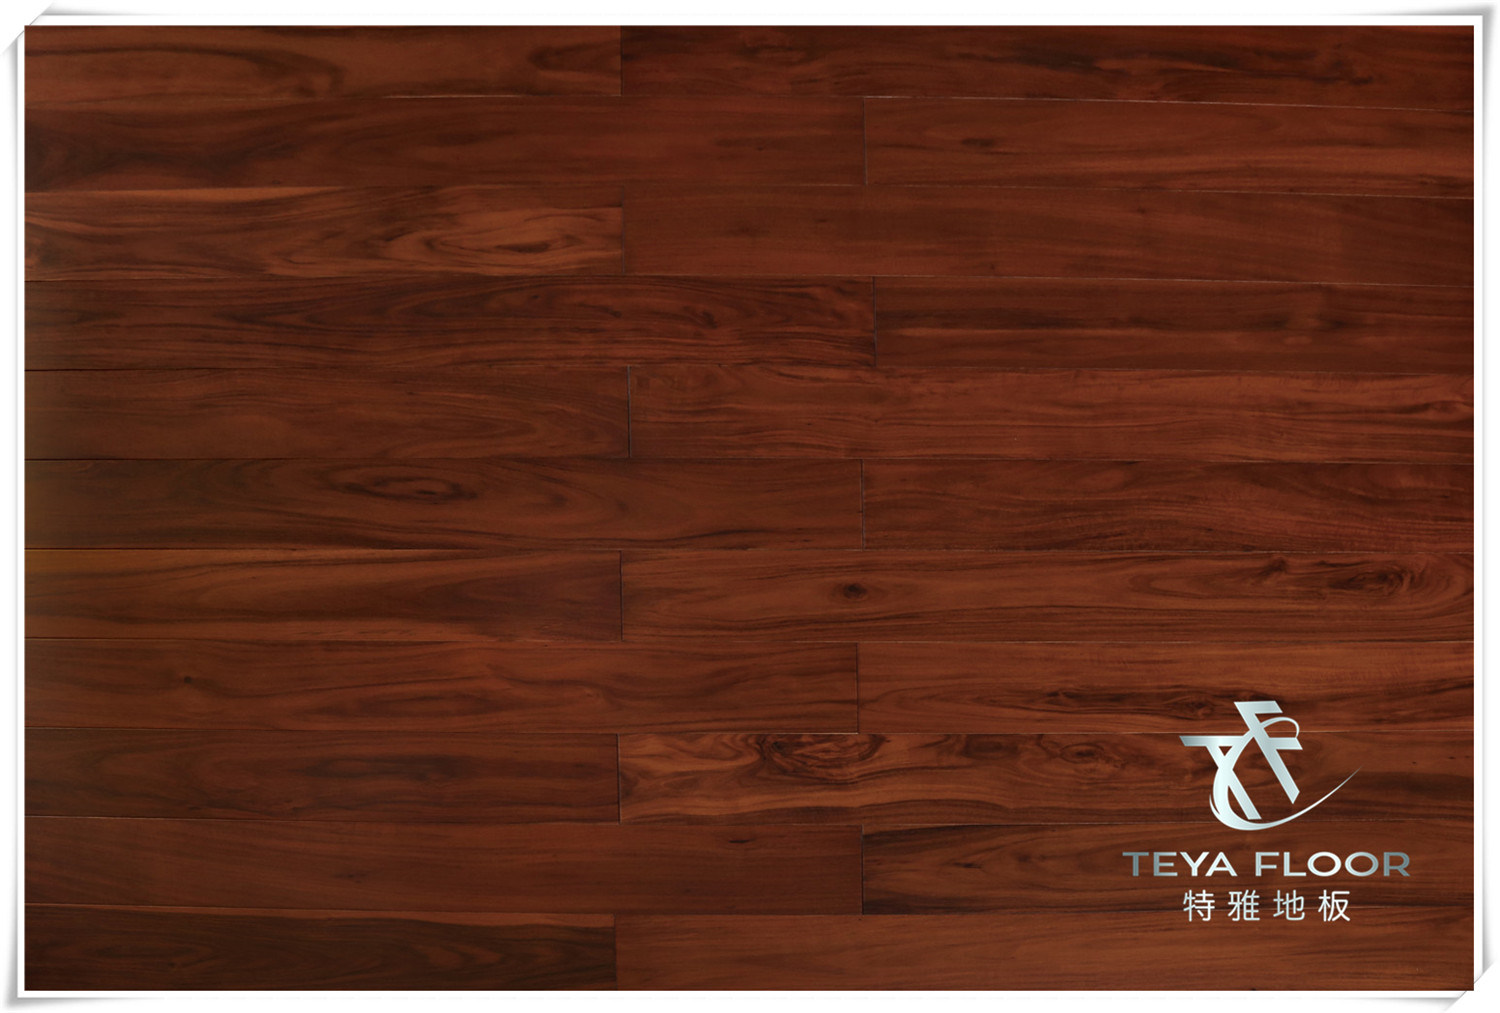 Rosewood Engineered Wood Flooring, Hadwood, UV Lacquer